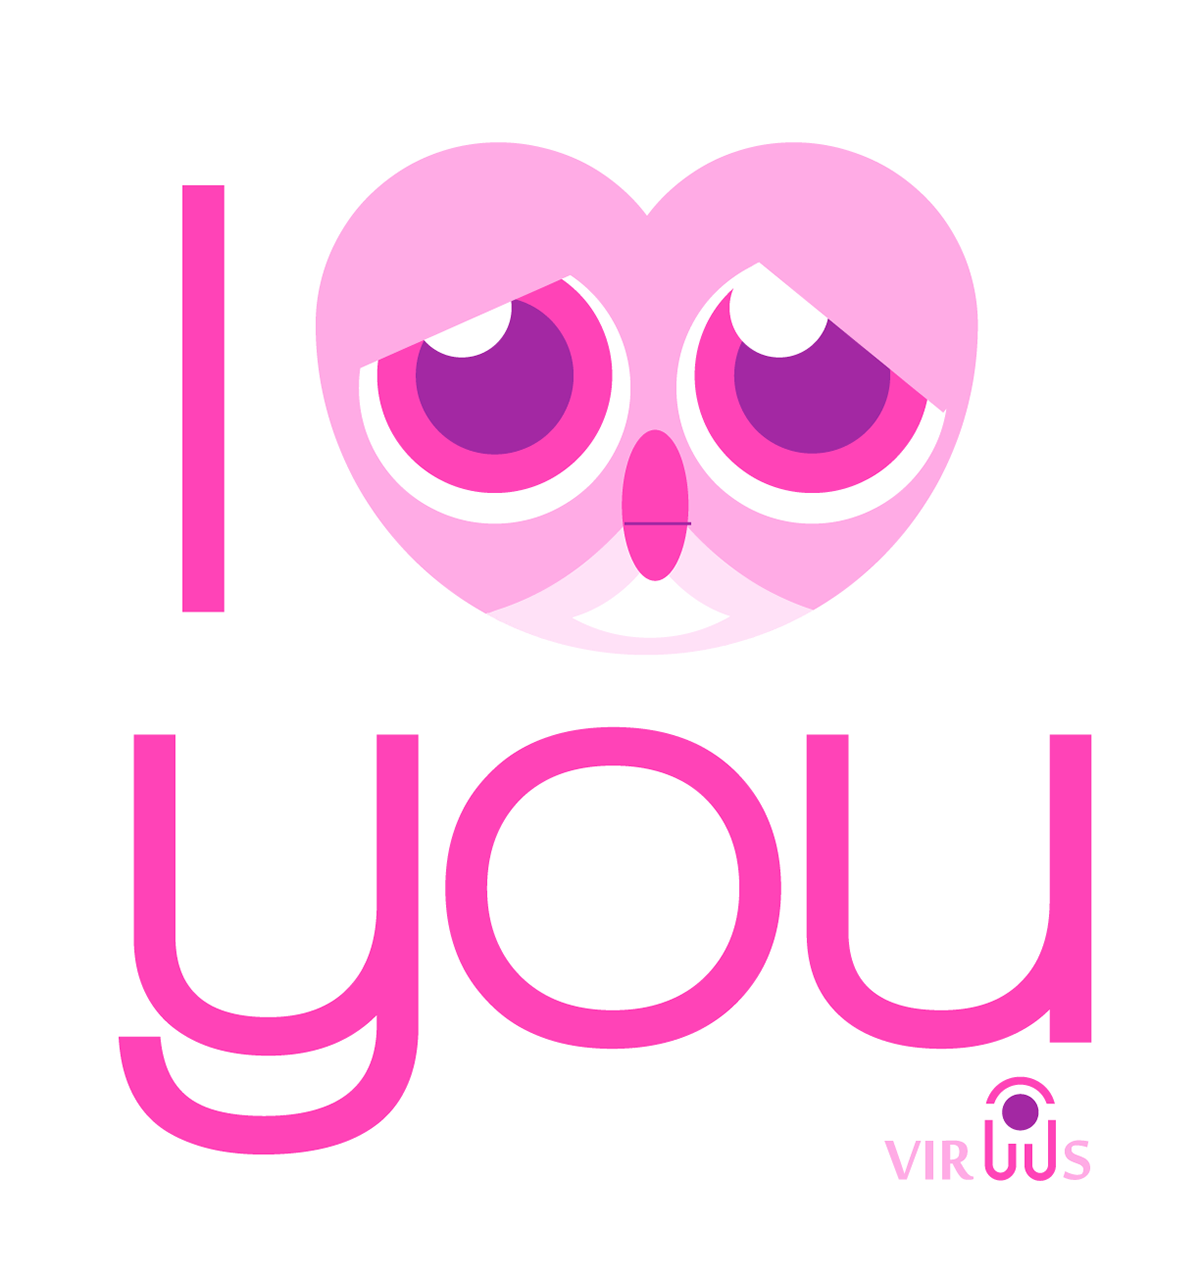 i owl you owl i love you cute pink heart